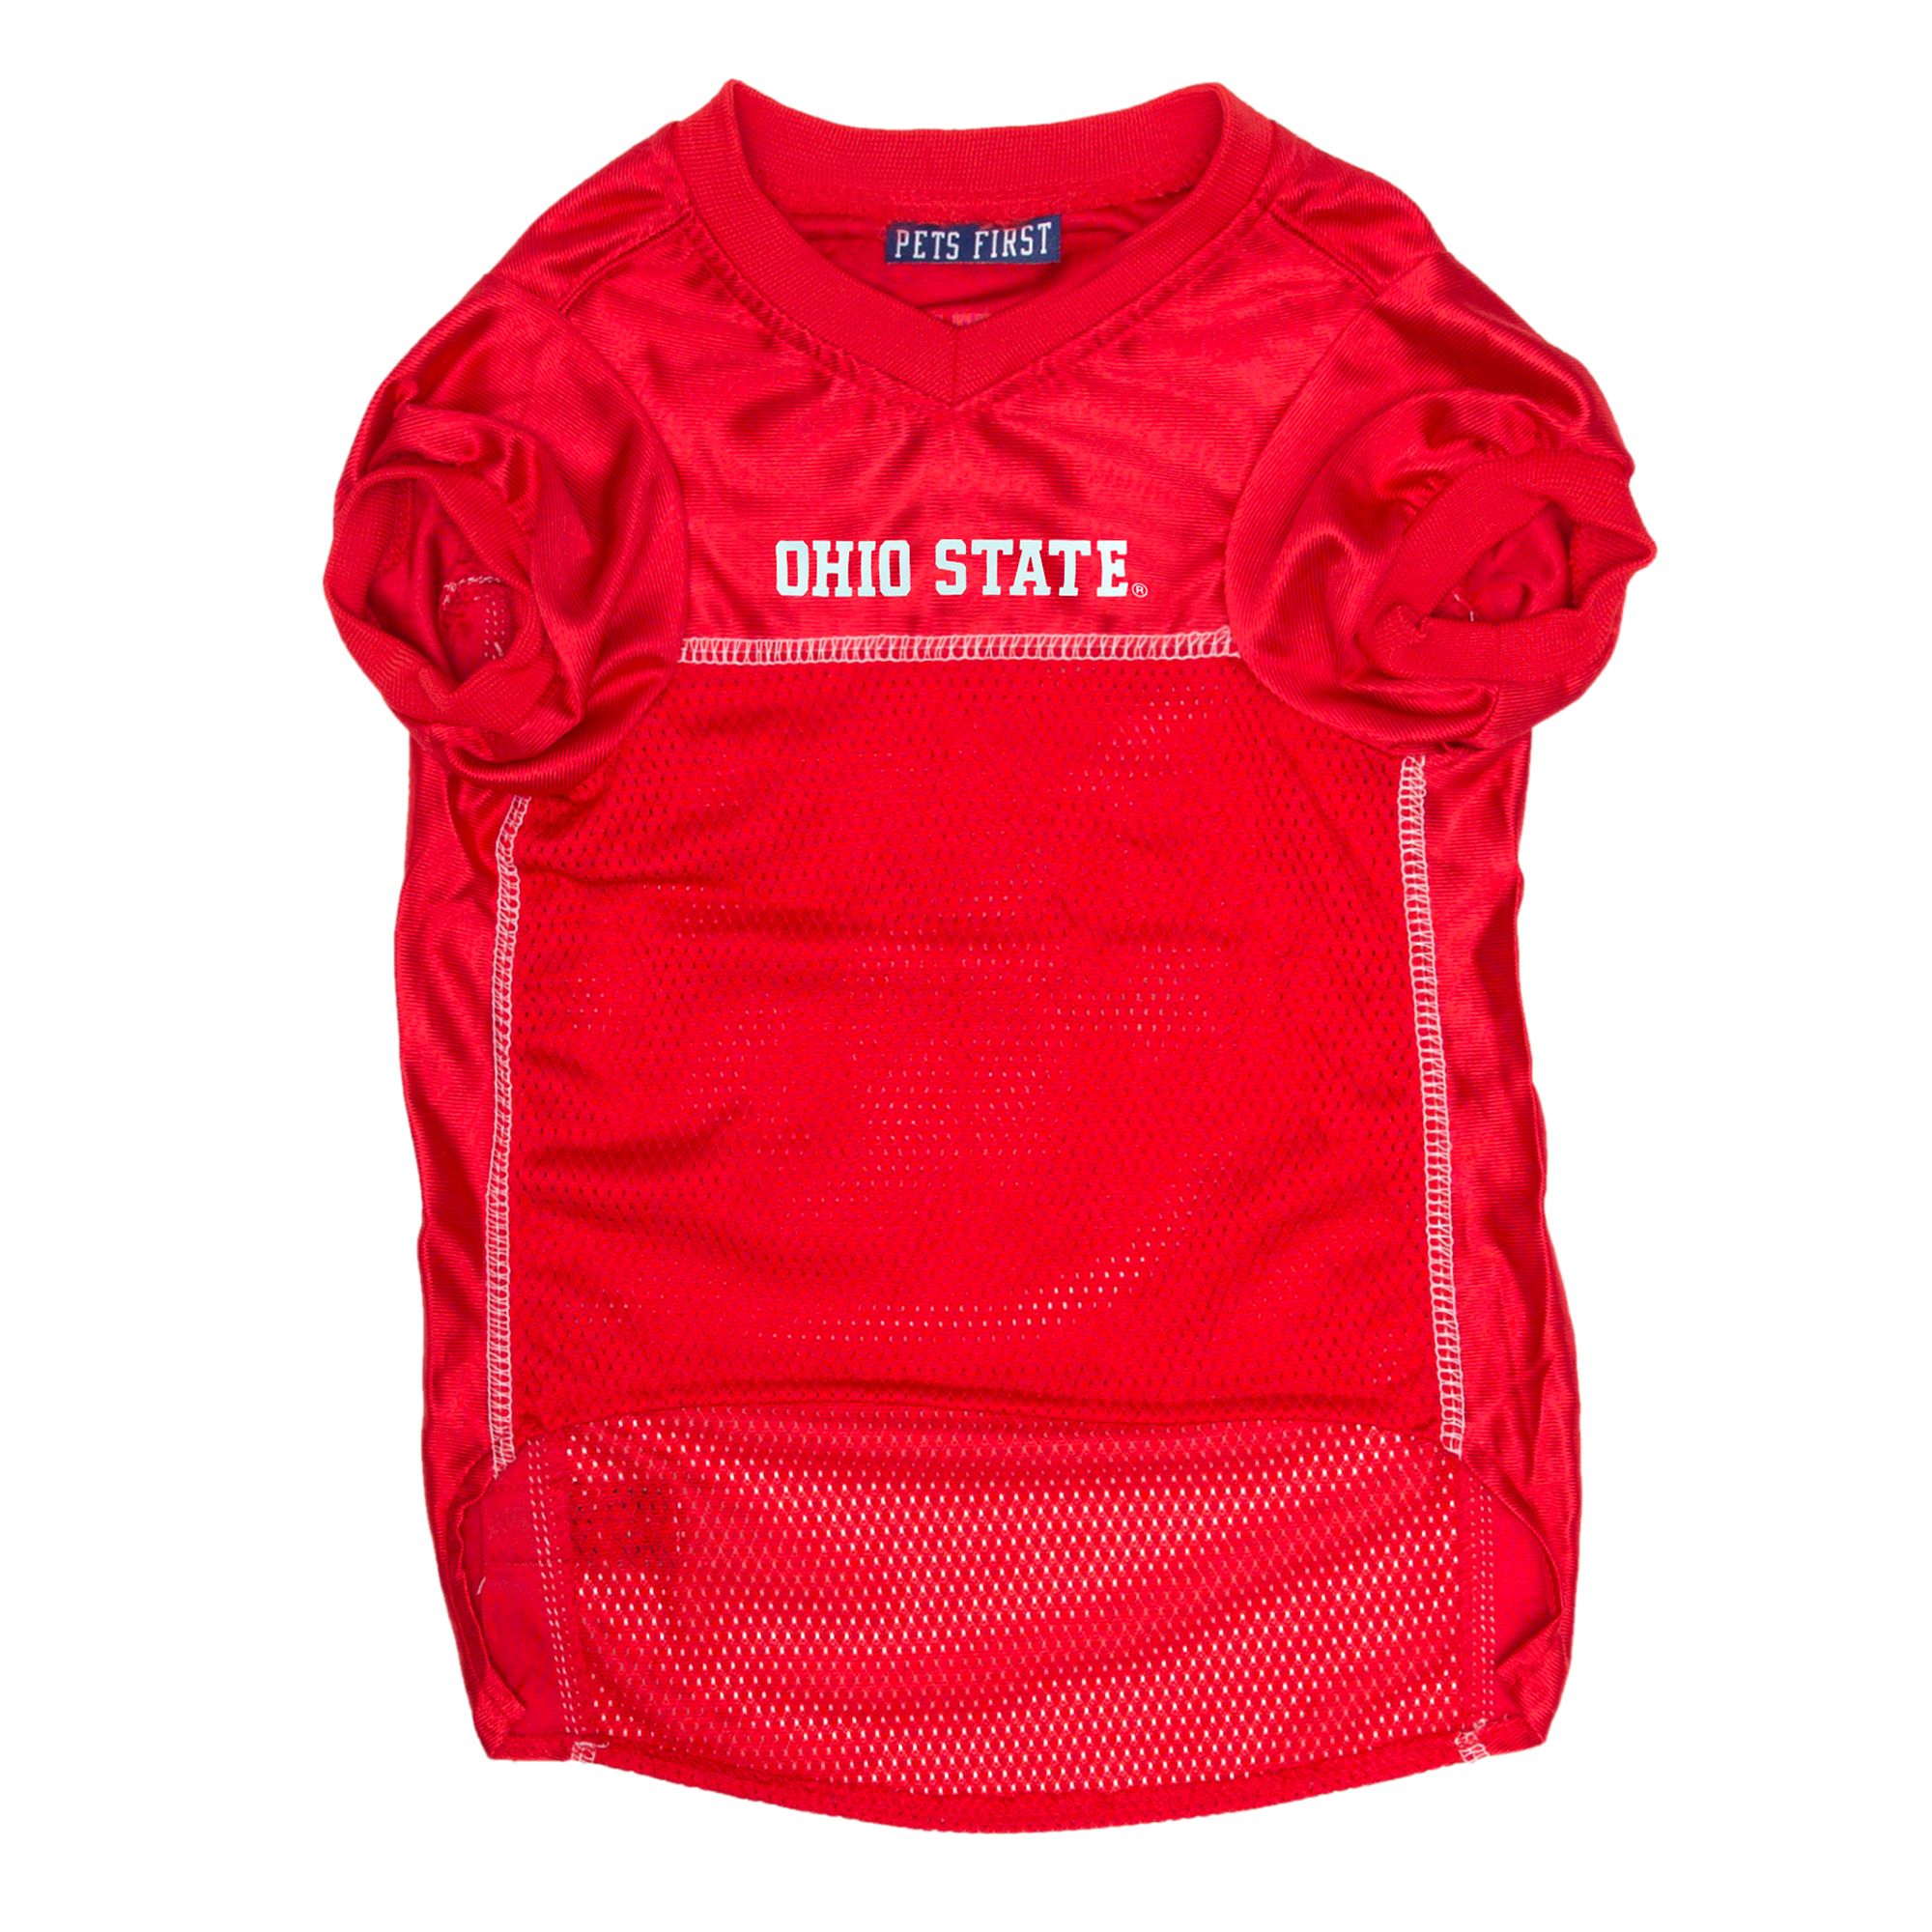 NEW all sizes Ohio State Buckeyes NCAA dog jerseys